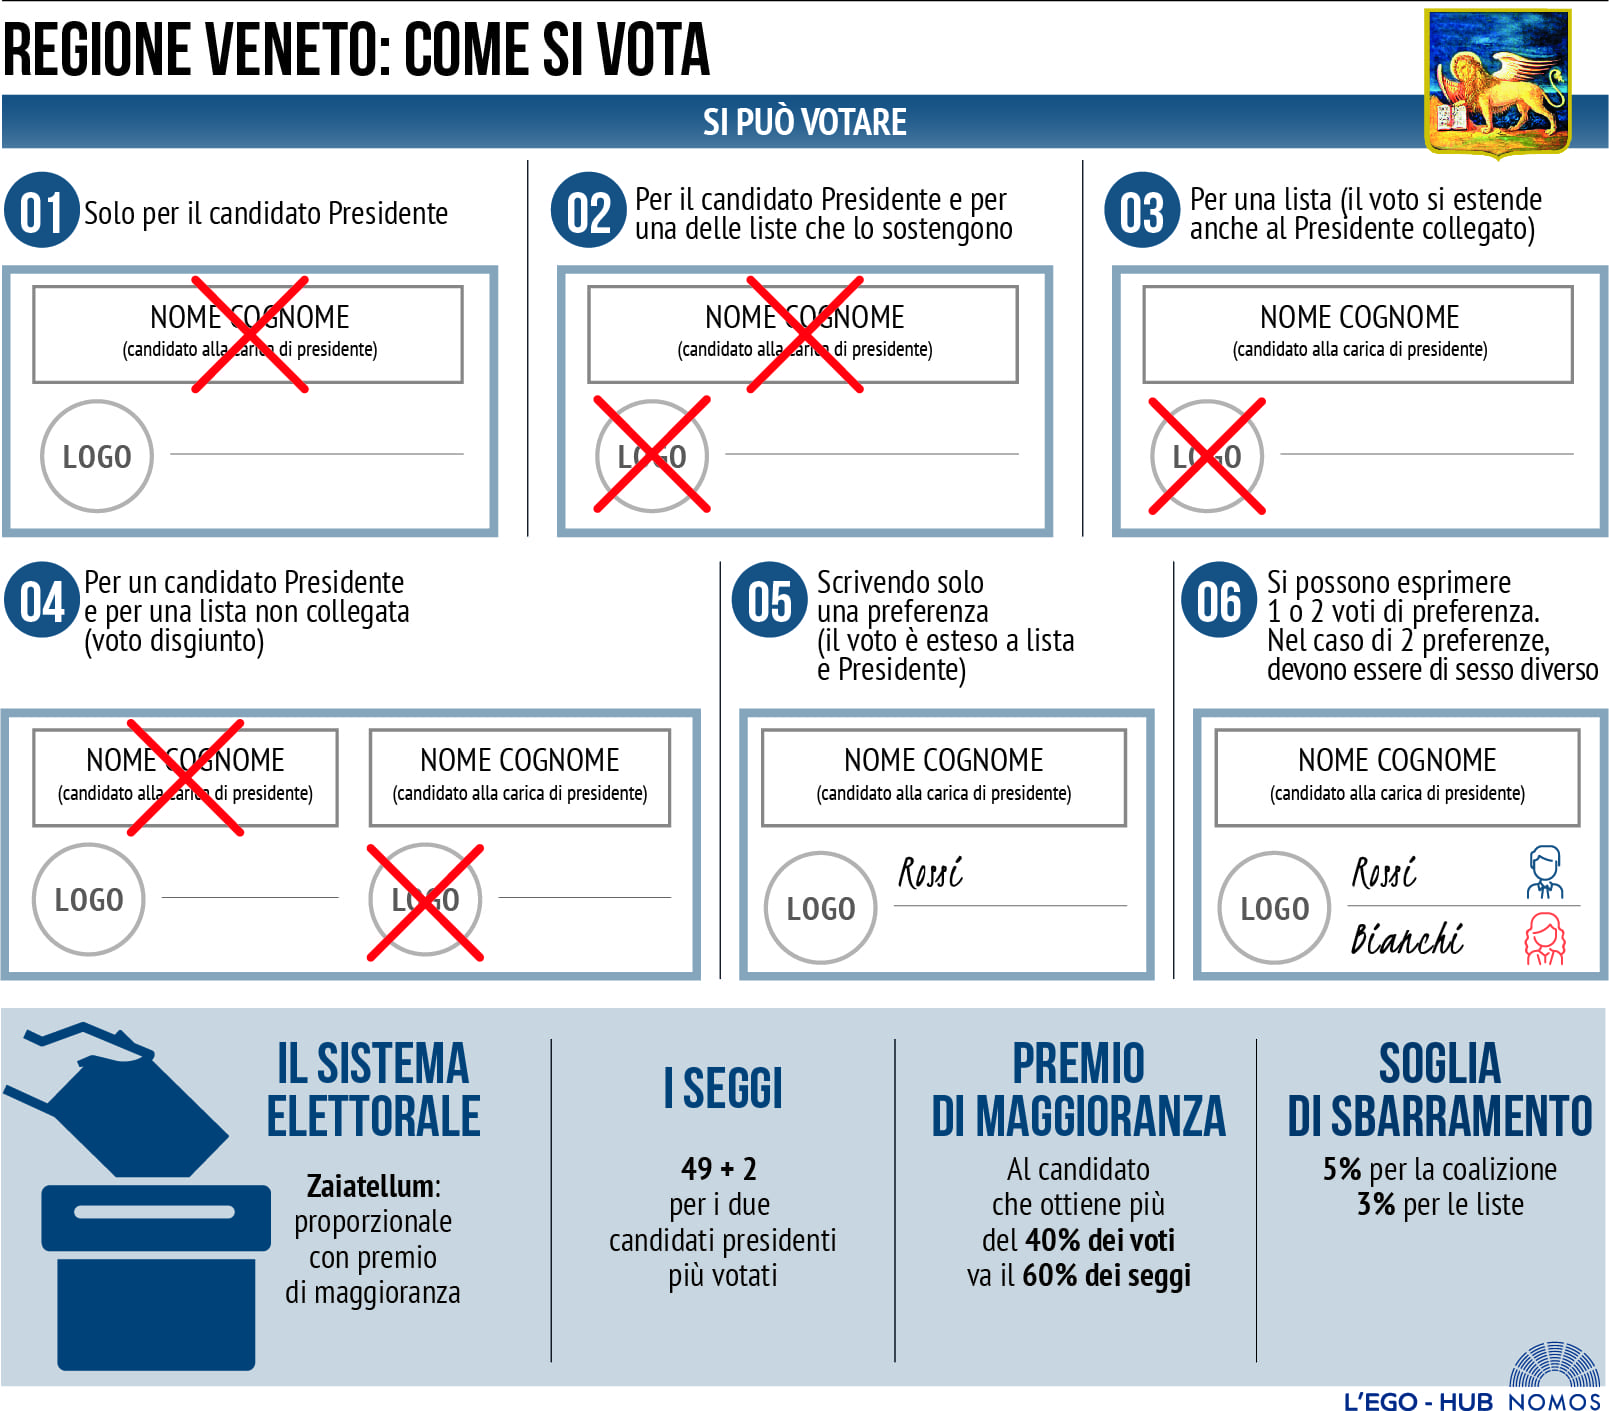 Il_sistema_elettorale_in_Veneto.jpg